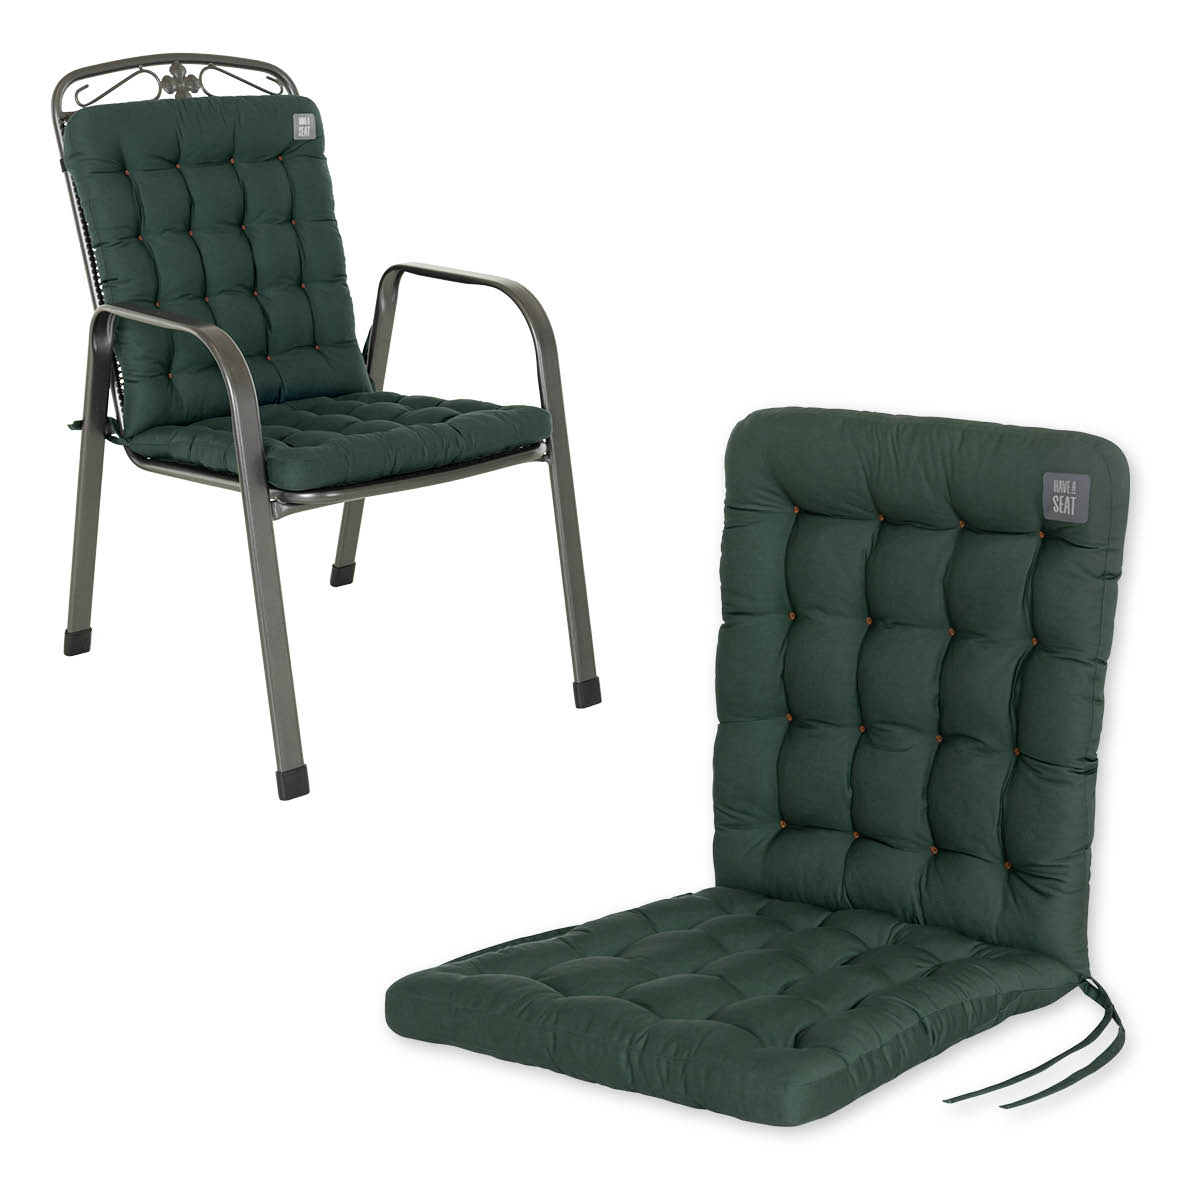 Cuscino per seduta – Cuscini Ortopedici